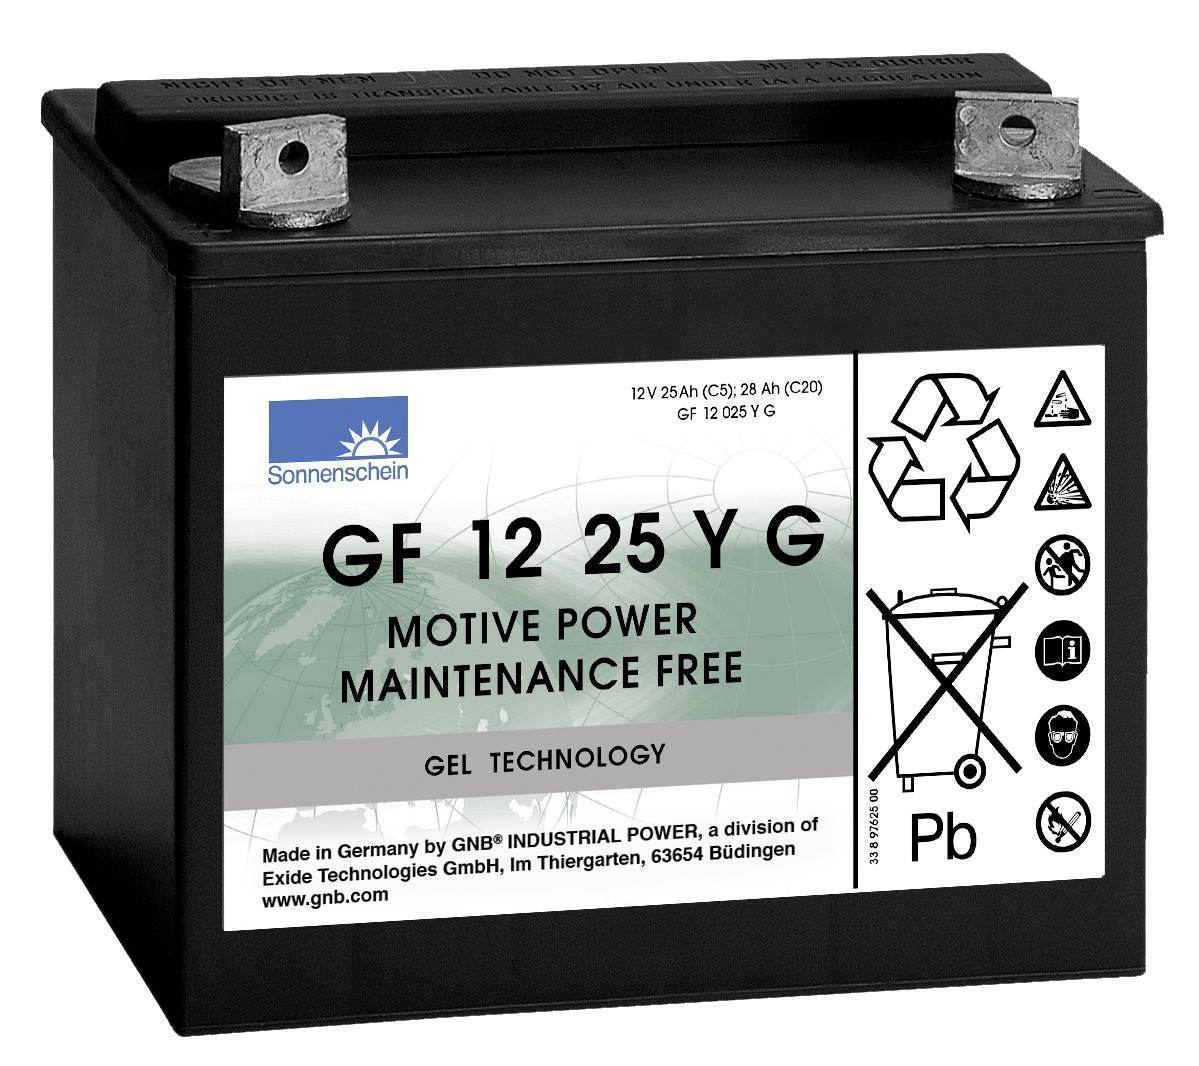 Baterii semitractiune - Baterie tractiune semitractiune Sonnenschein GF 12 025 Y G, climasoft.ro